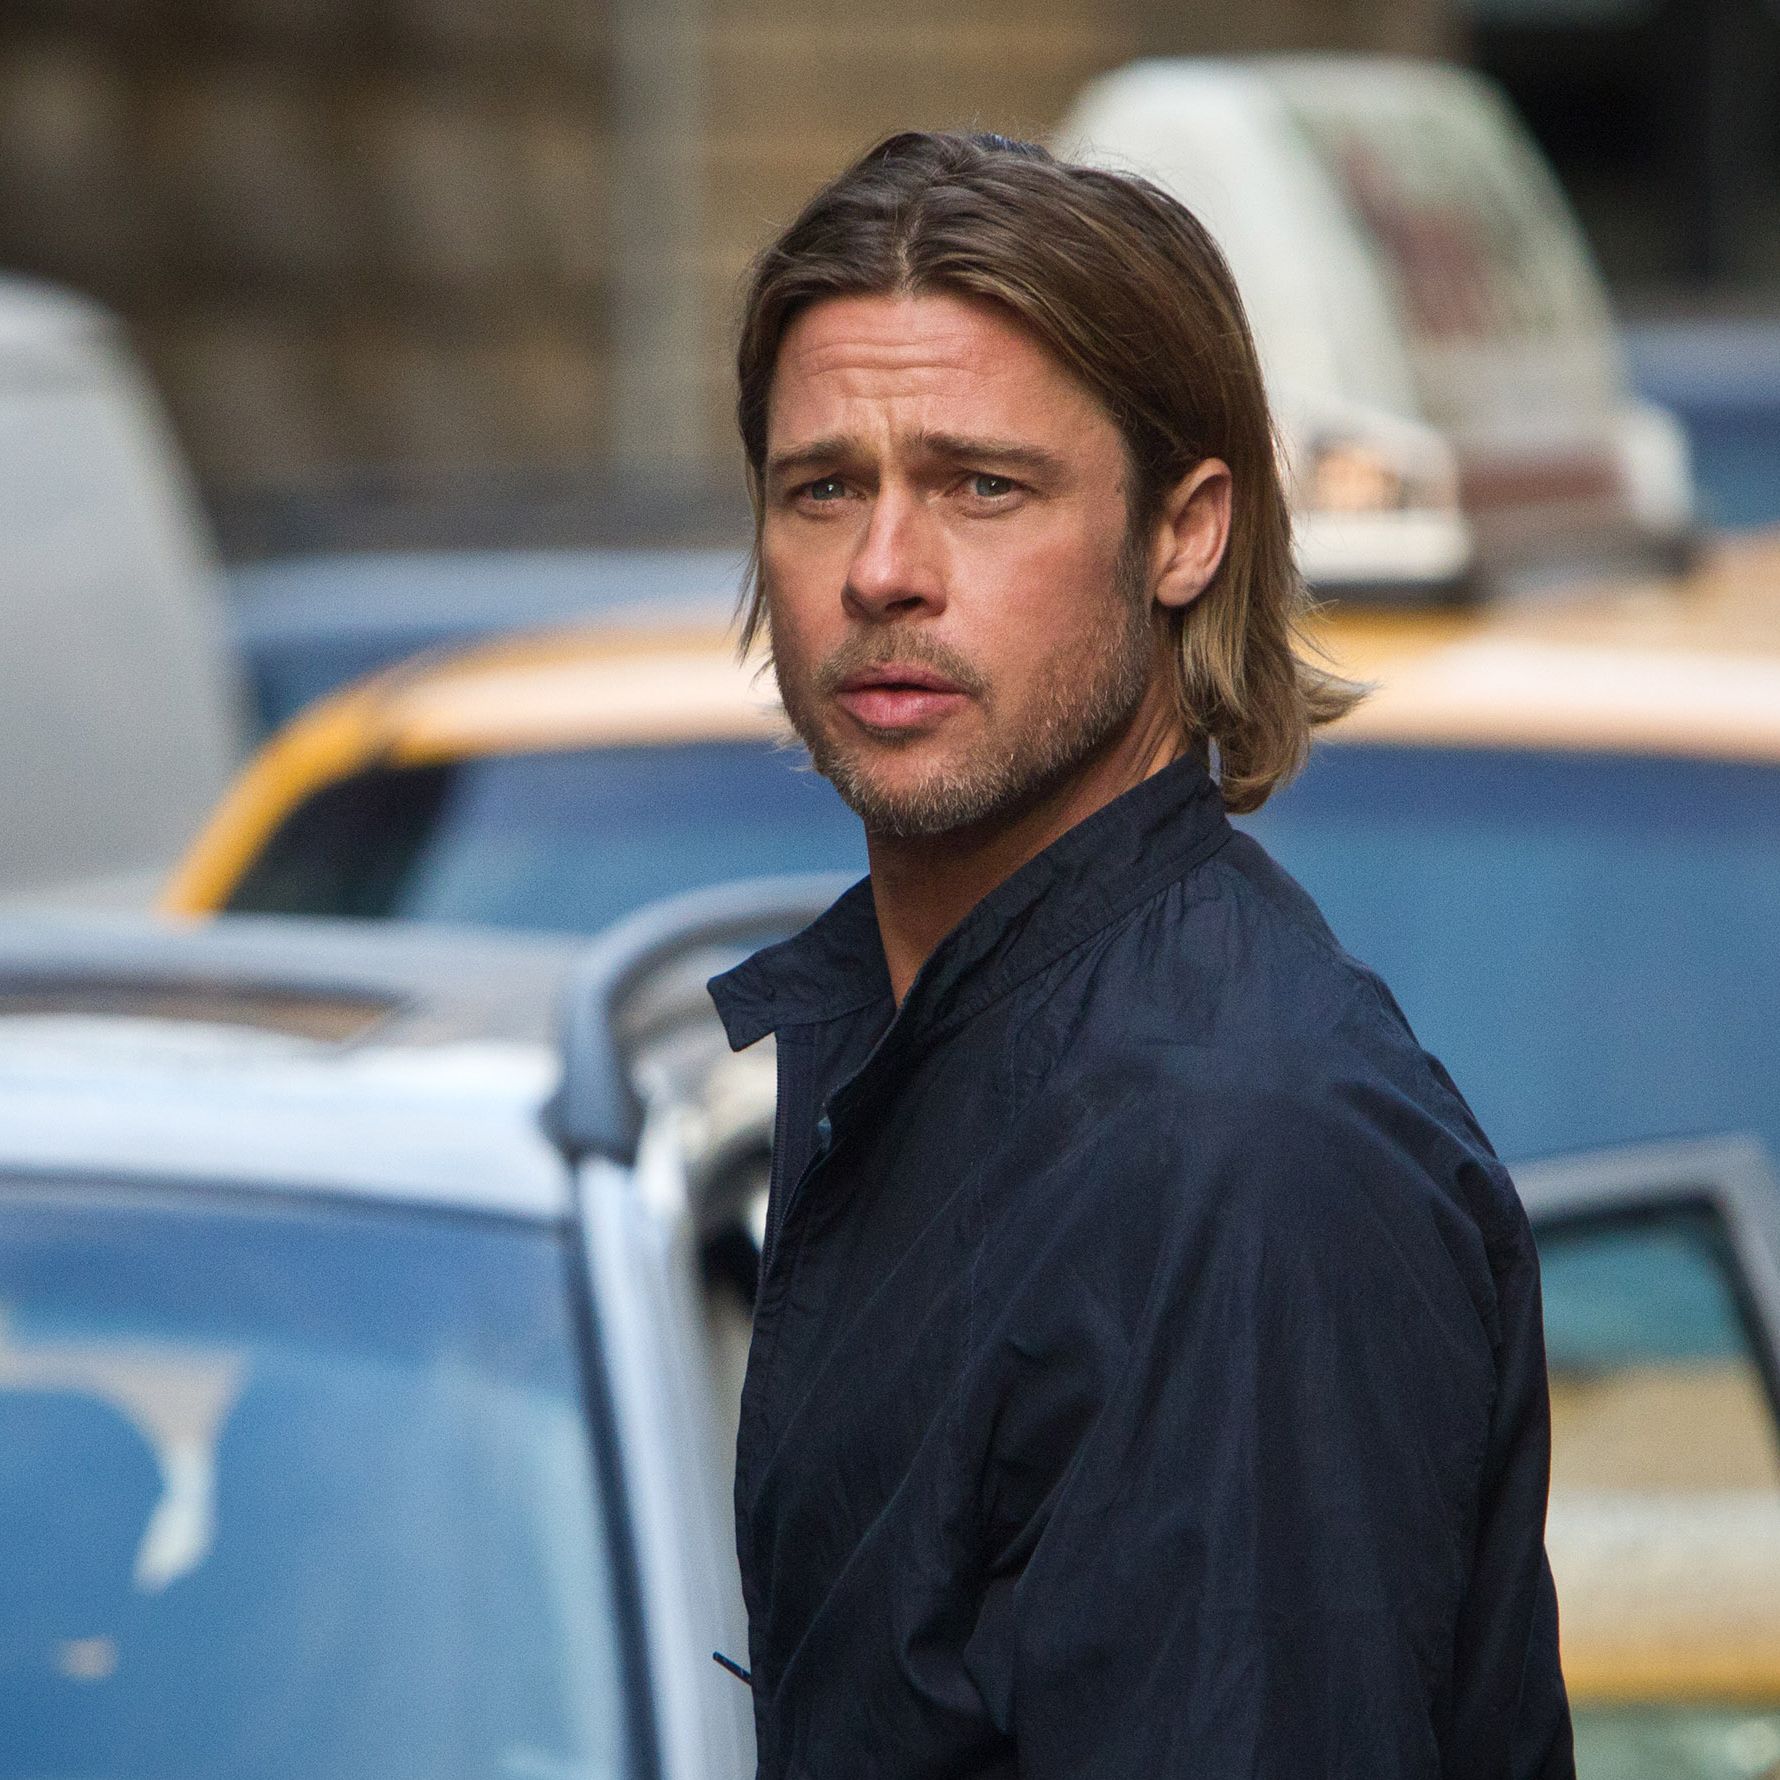 World War Z 2: Will Brad Pitt's Zombie Sequel Ever Release?